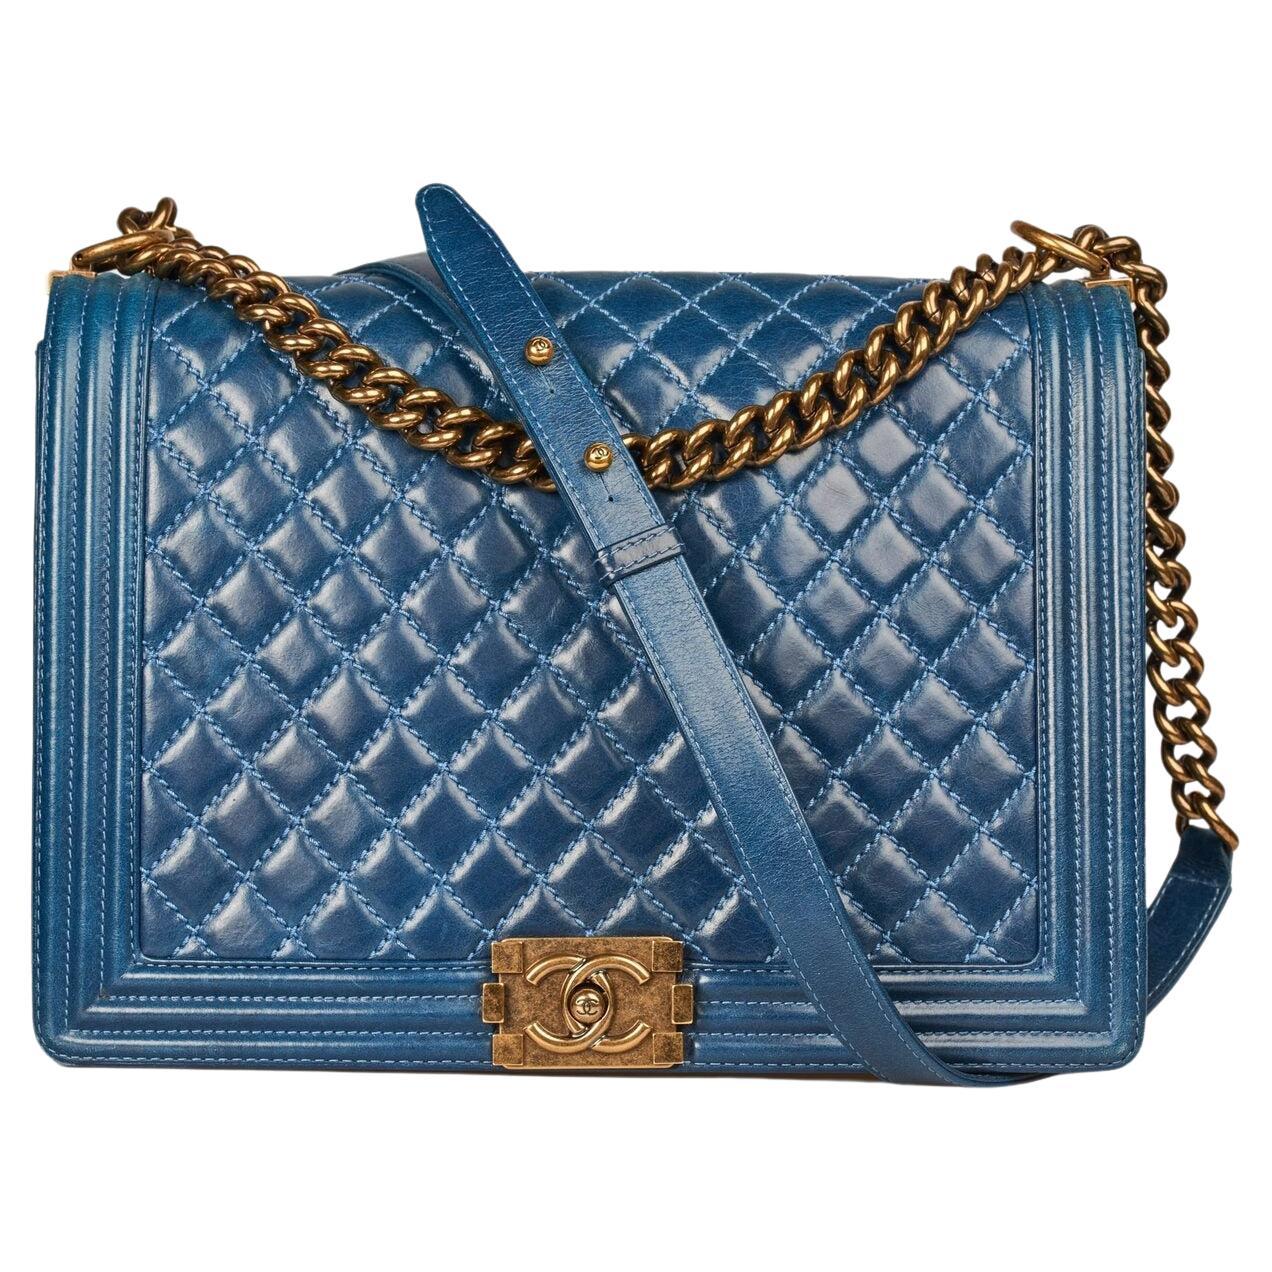 Boy Chanel Handbag